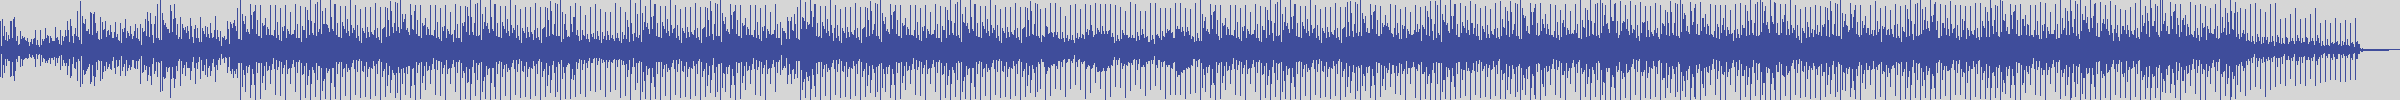 nf_boyz_records [NFY008] Adrian Baar - No Better Sound [Deephouse Mix] audio wave form